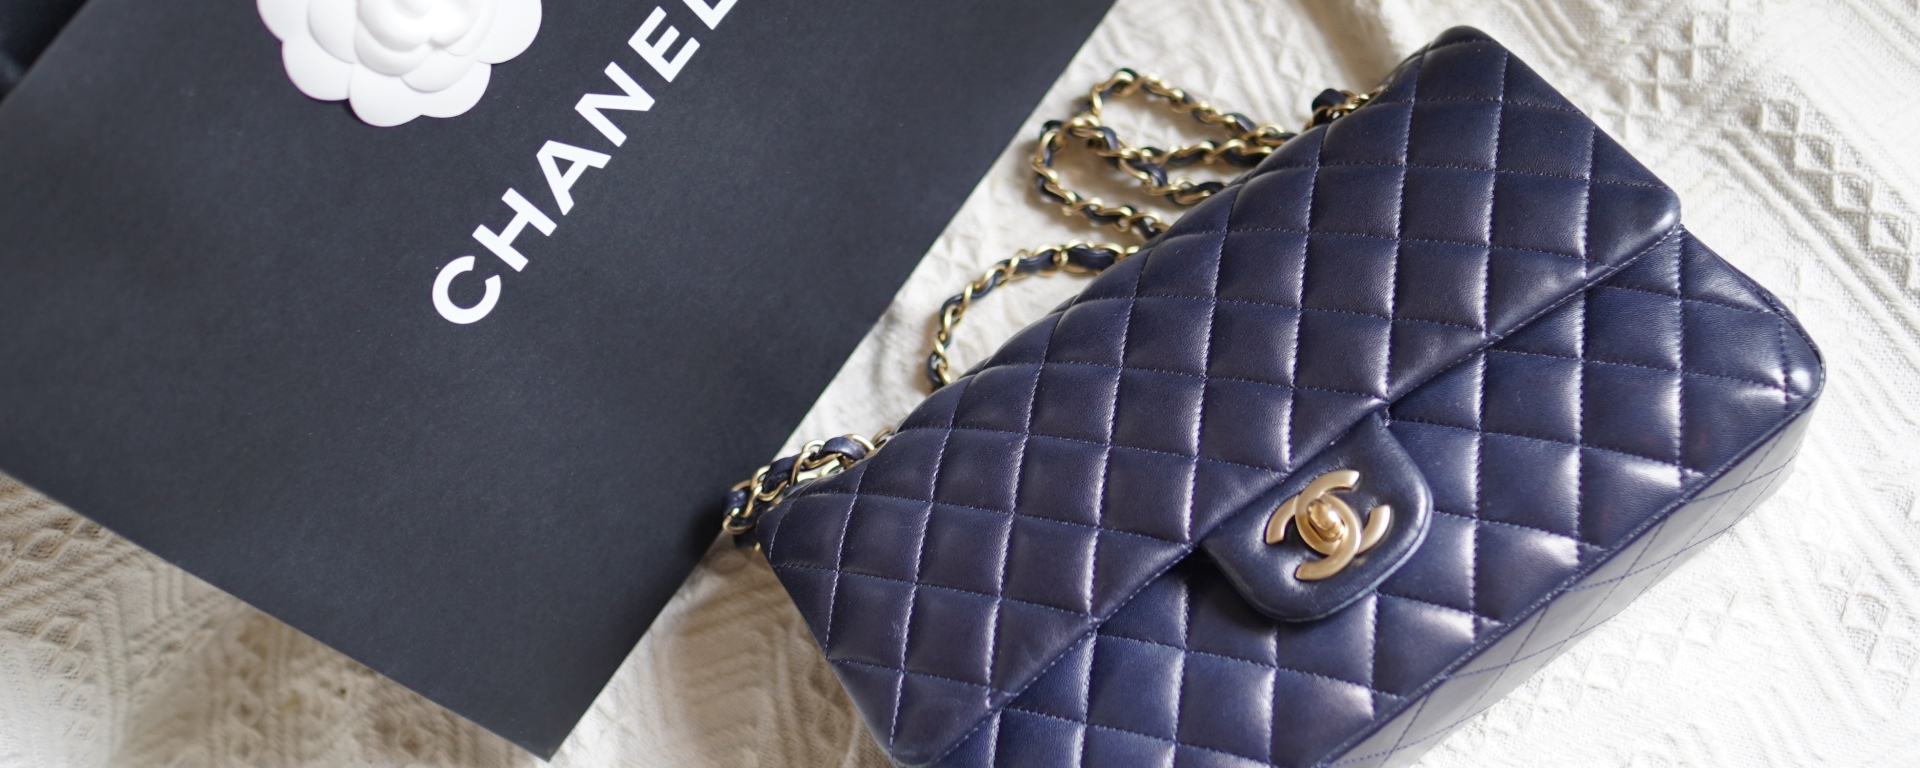 Chanel Classic Medium Flap Bag Review